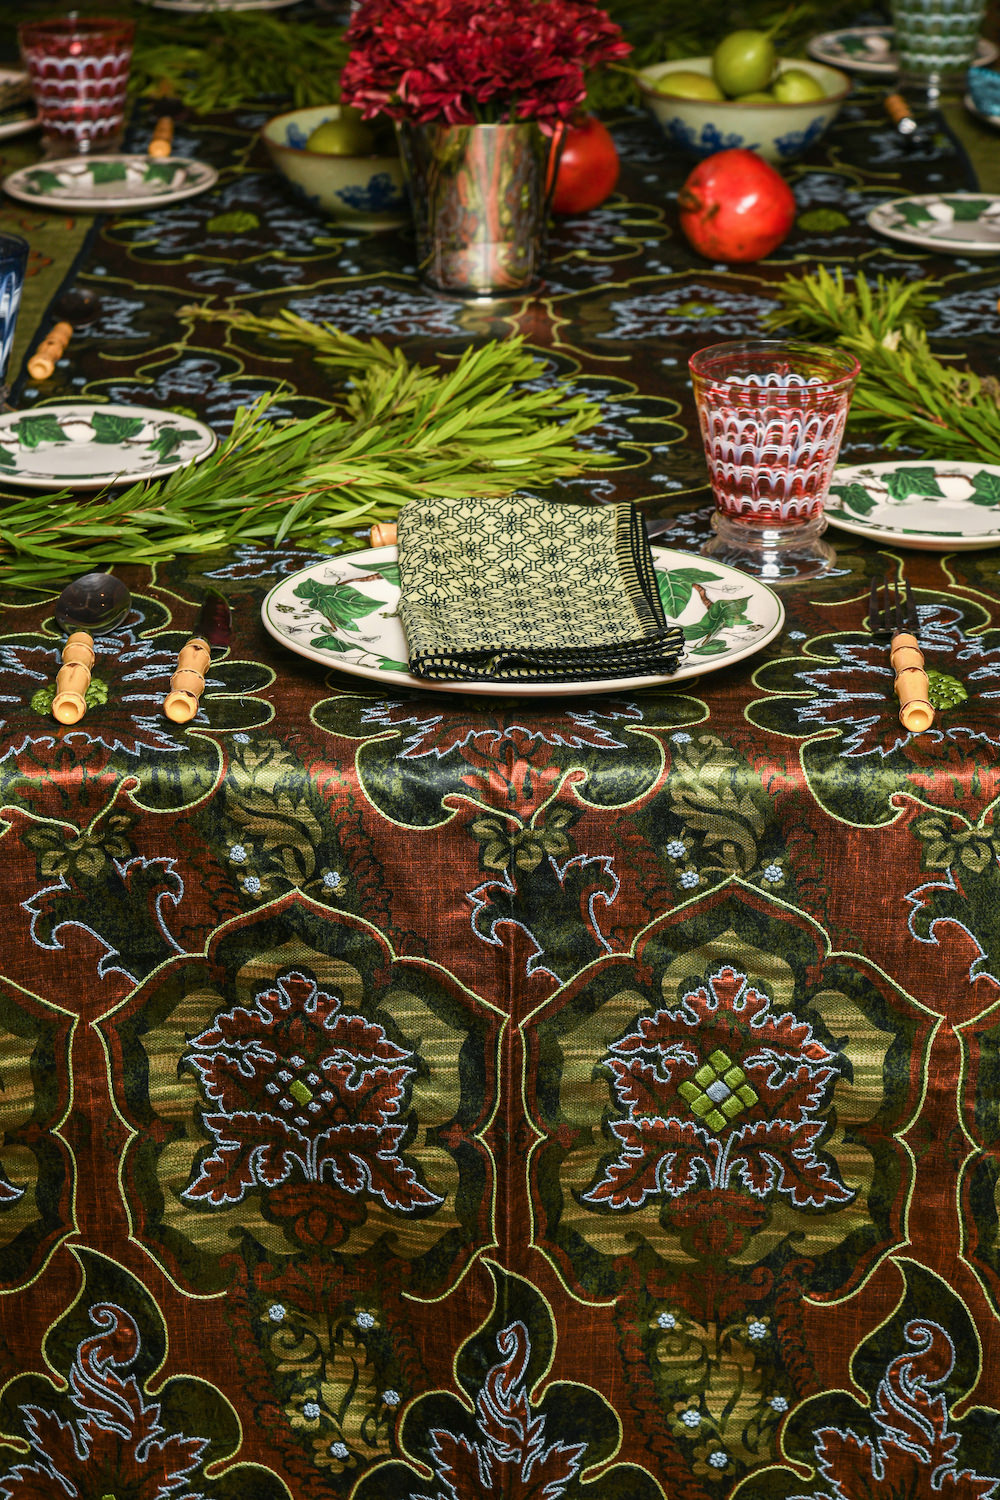 quintessence x d'ascoli table linen collection